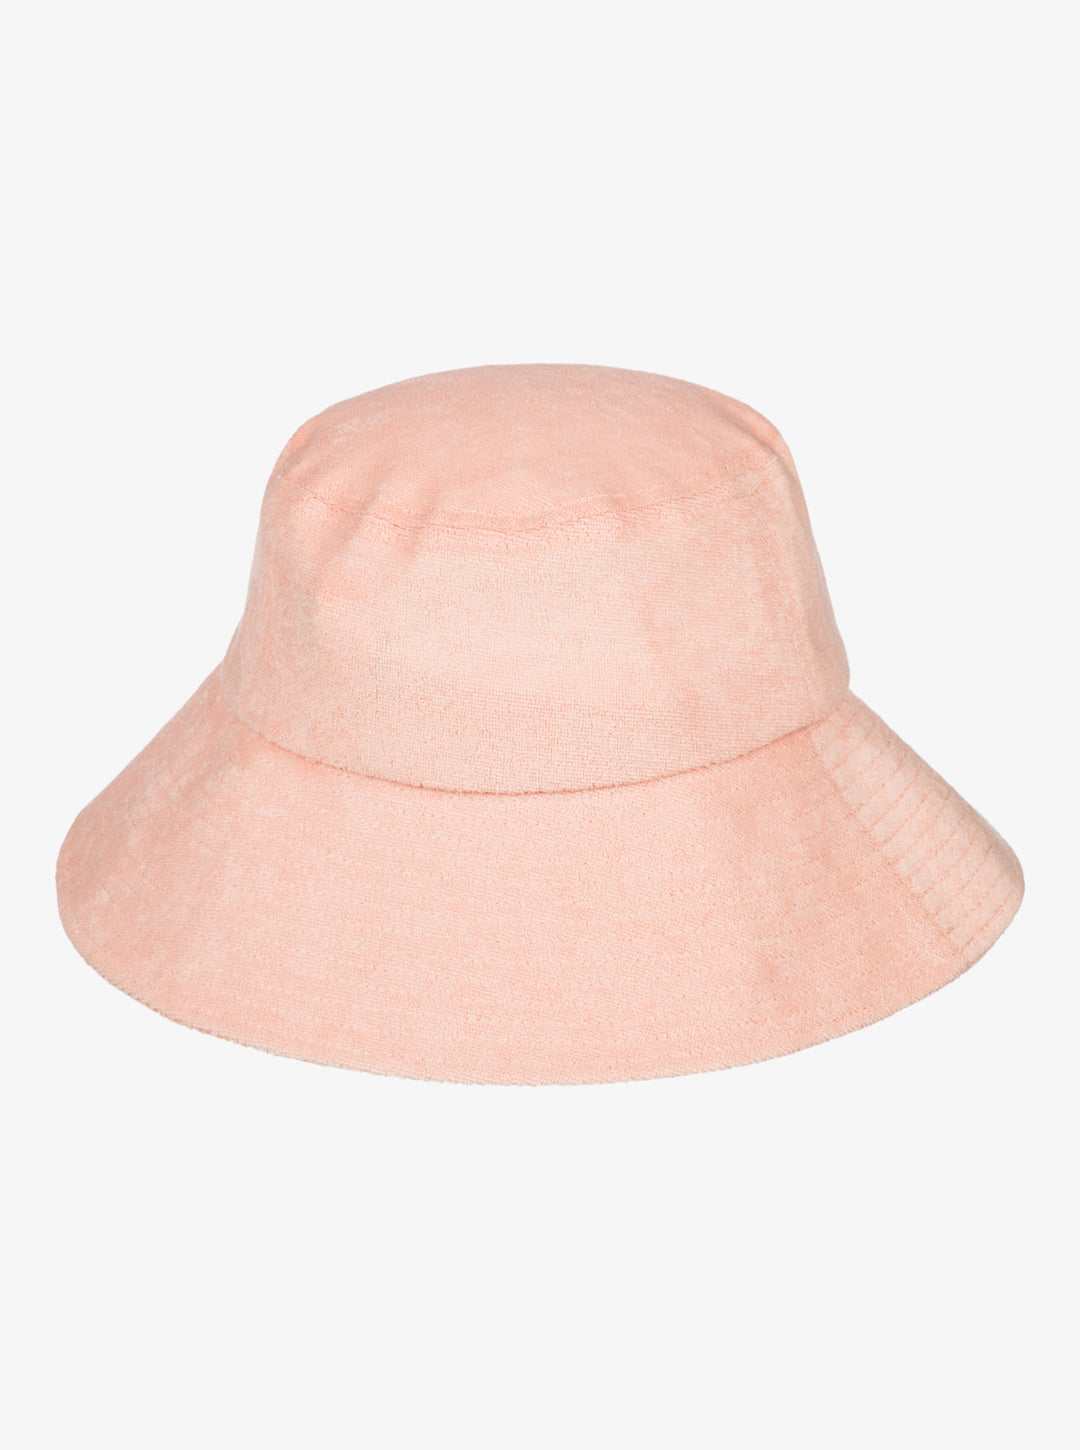 Roxy Kiwi Colada Bucket Hat - Papaya Punch - Sun Diego Boardshop